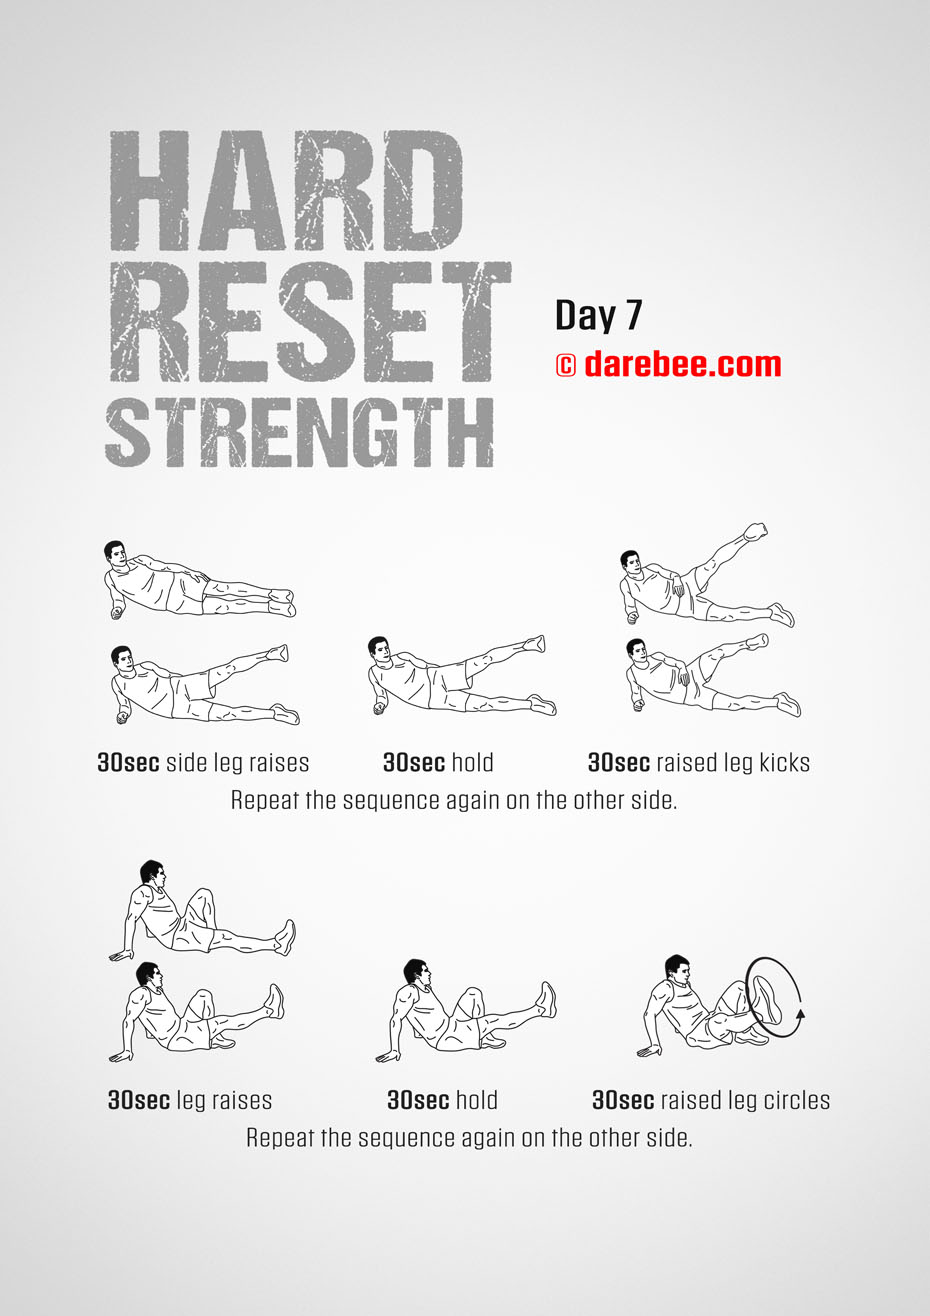 The Hard Reset Strength - Fitness Program by DAREBEE